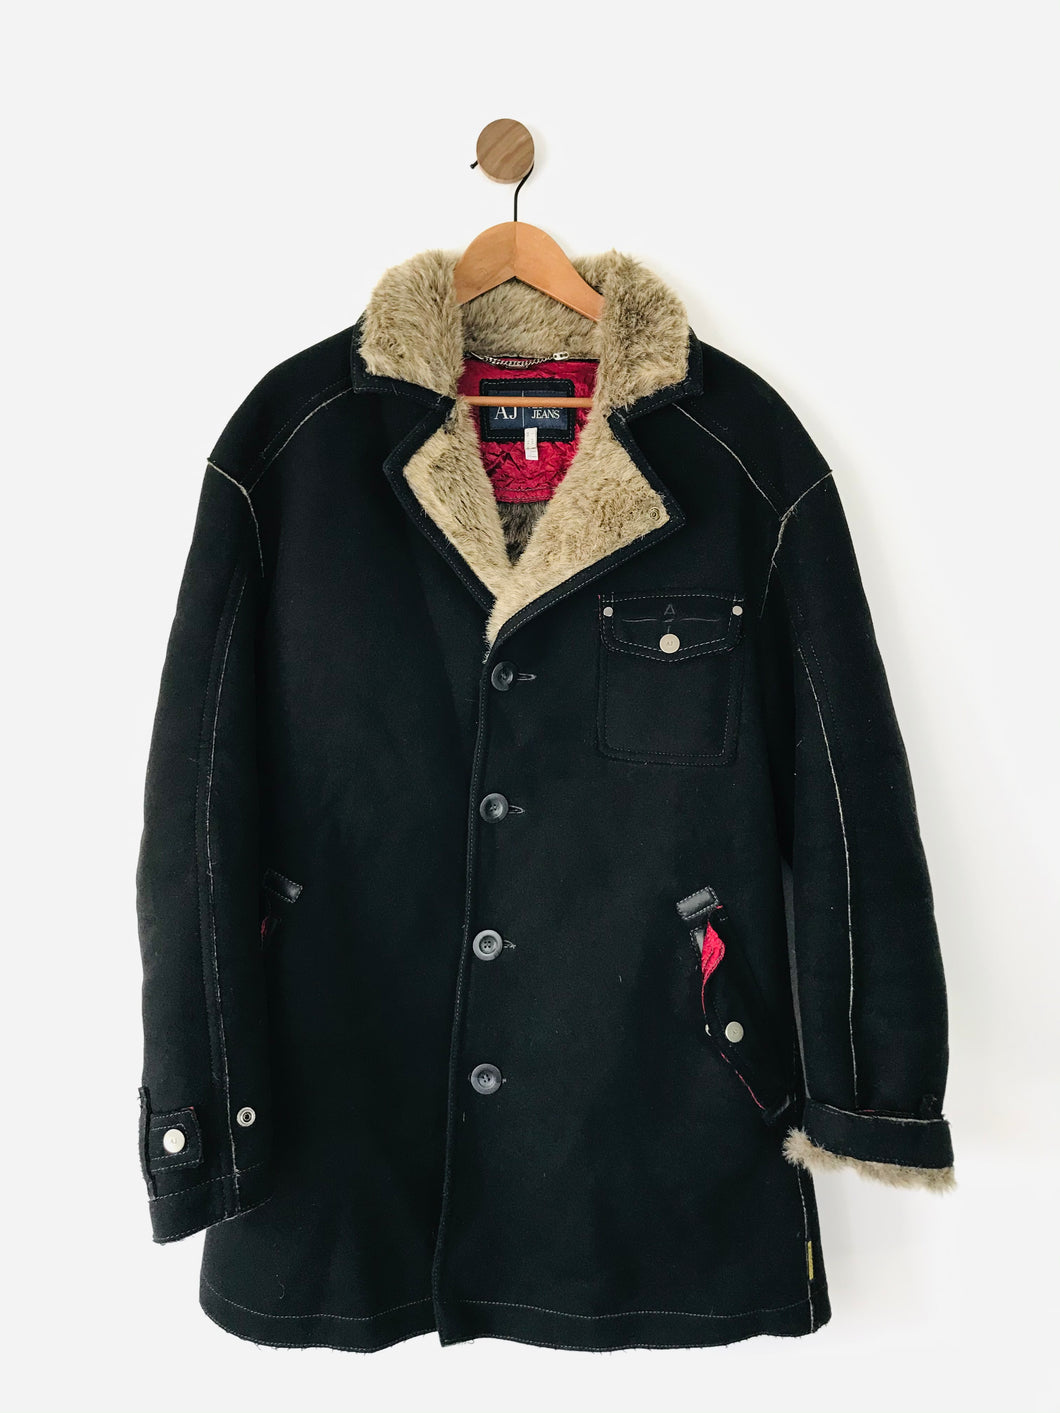 Armani Jeans Men’s Fur Lined Shearling Coat Jacket | 50 M | Black